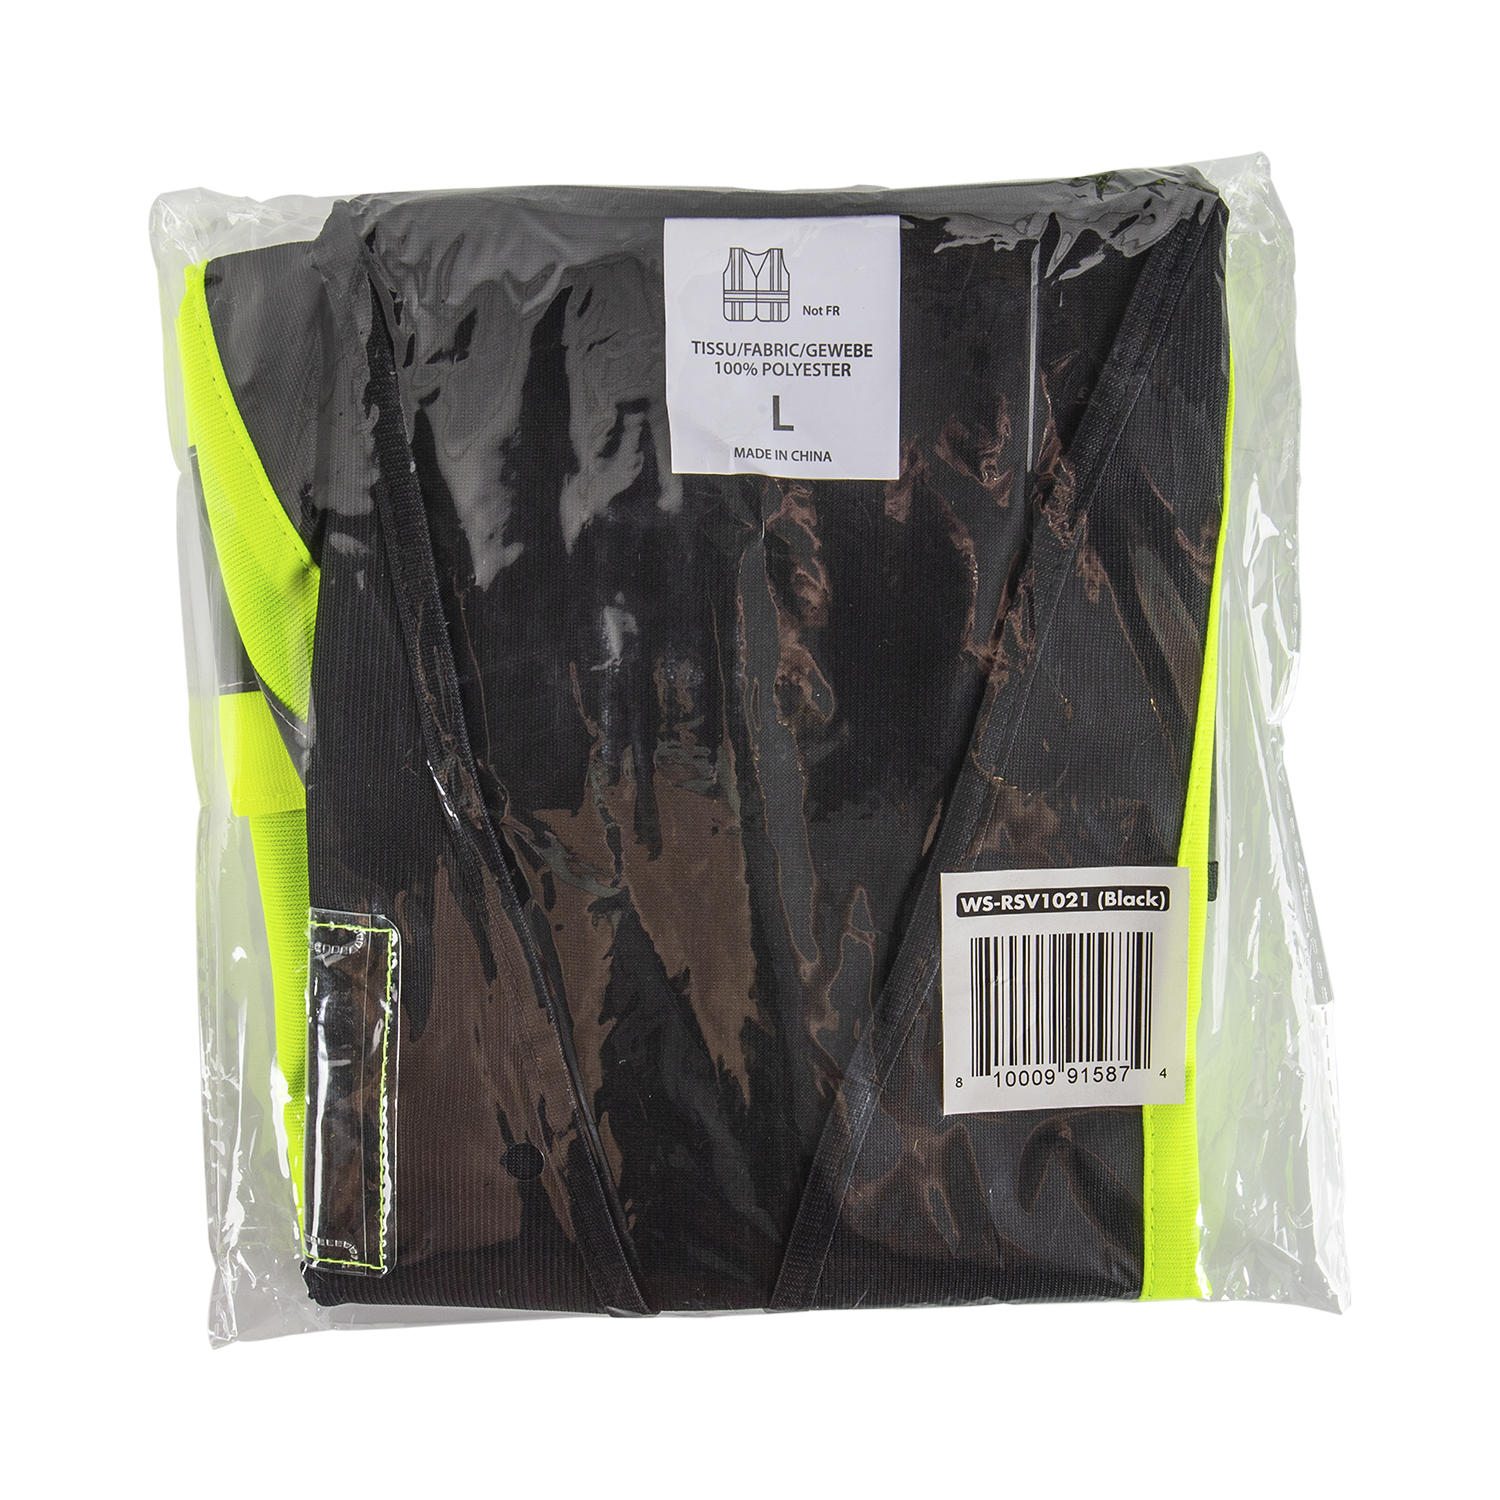 Karat High Visibility Reflective Safety Vest with Zipper Fastening (Black), Large - 1 pc